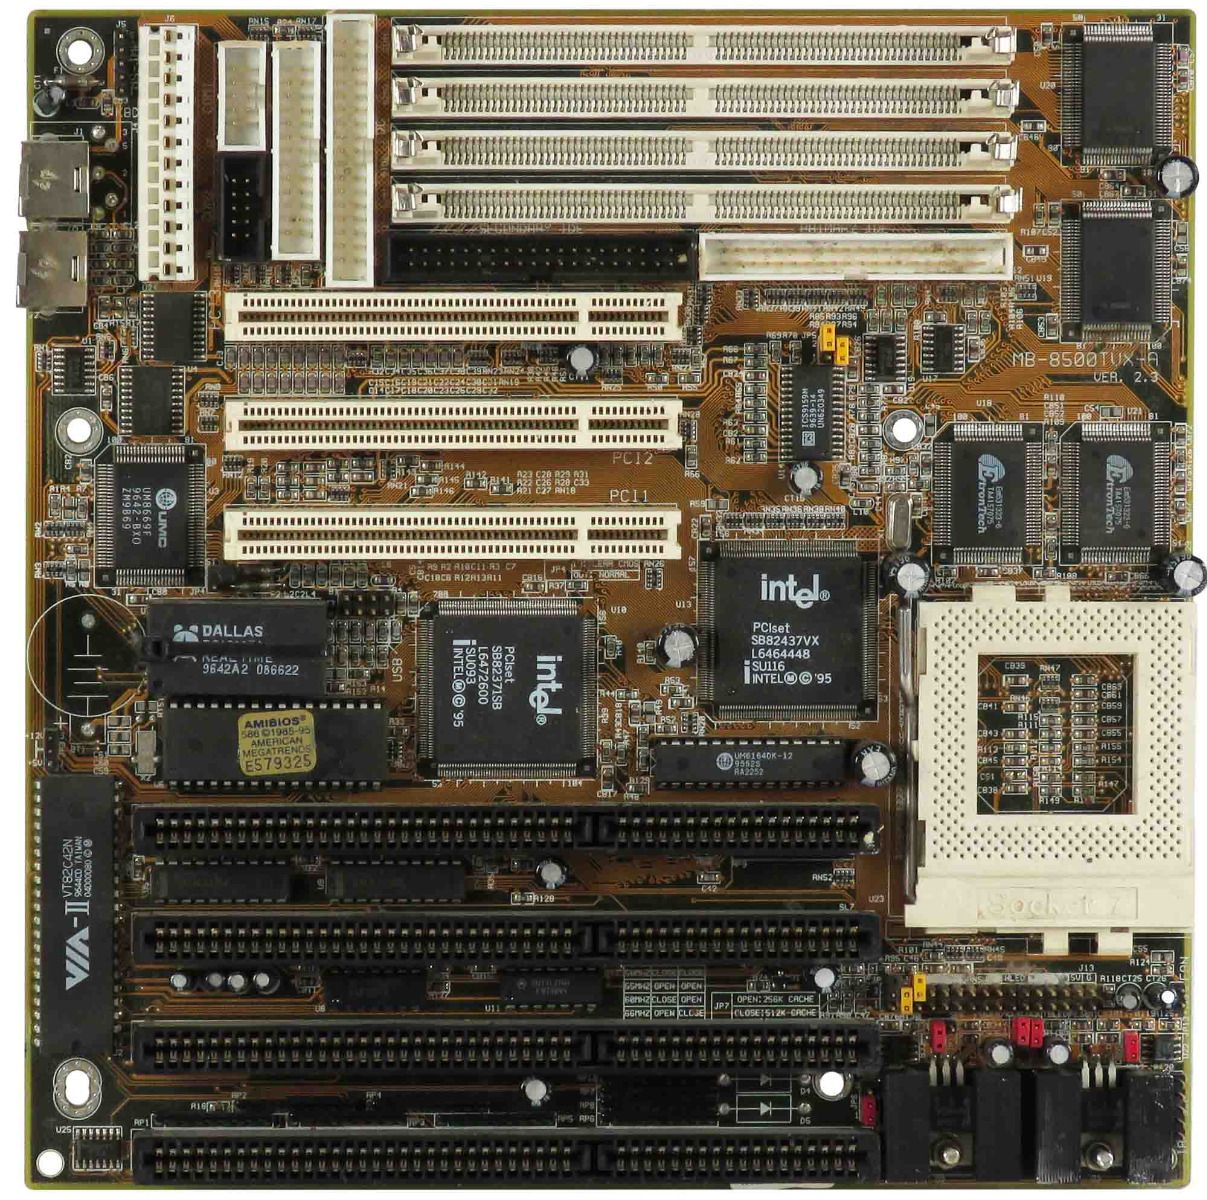 BIOSTAR MB-8500TVX-A VER. 2.3 PRISE 7 SIMM PCI ISA